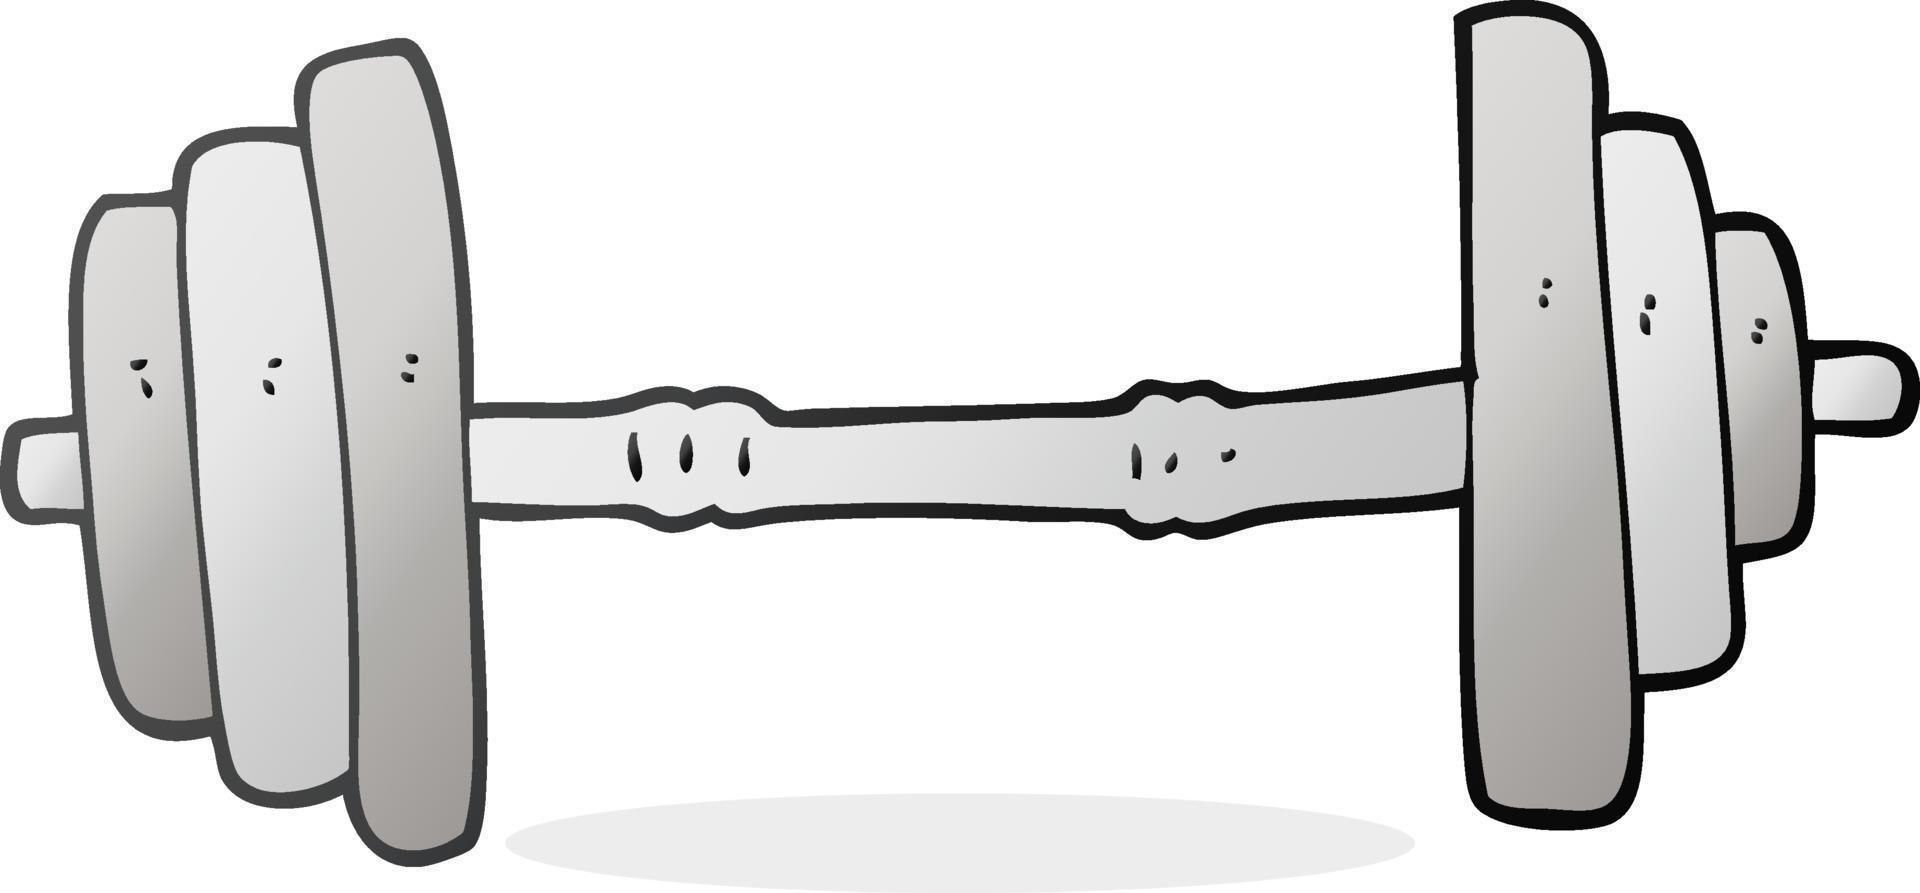 doodle character cartoon barbell vector